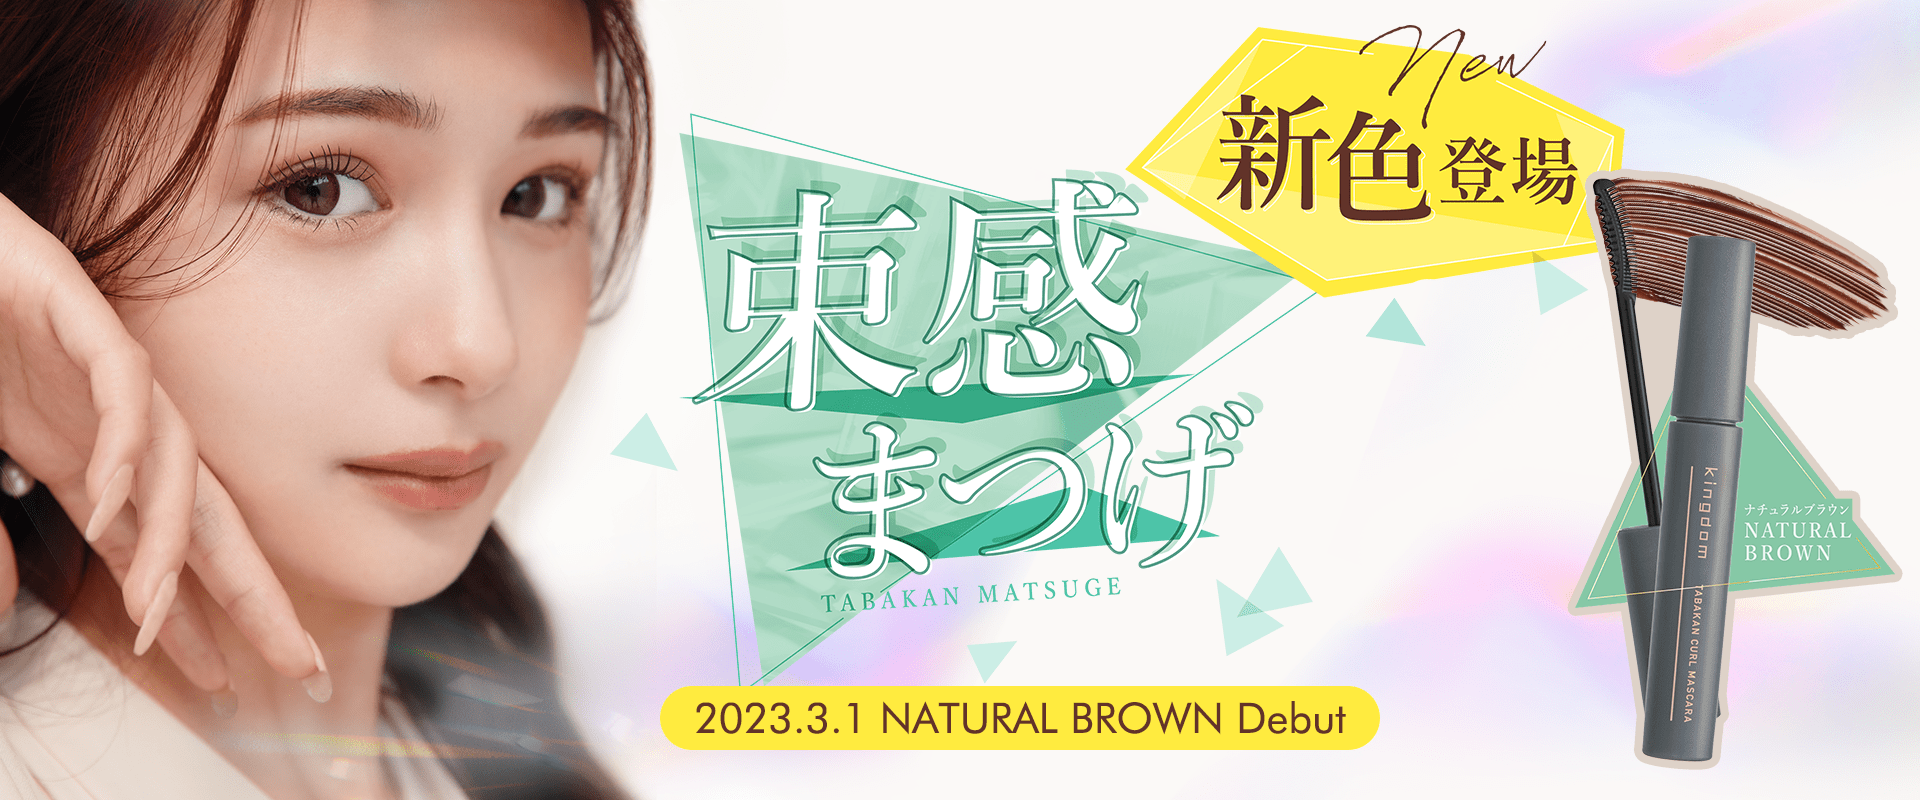 2023.3.1 Natural Brown Debut 束感まつげ